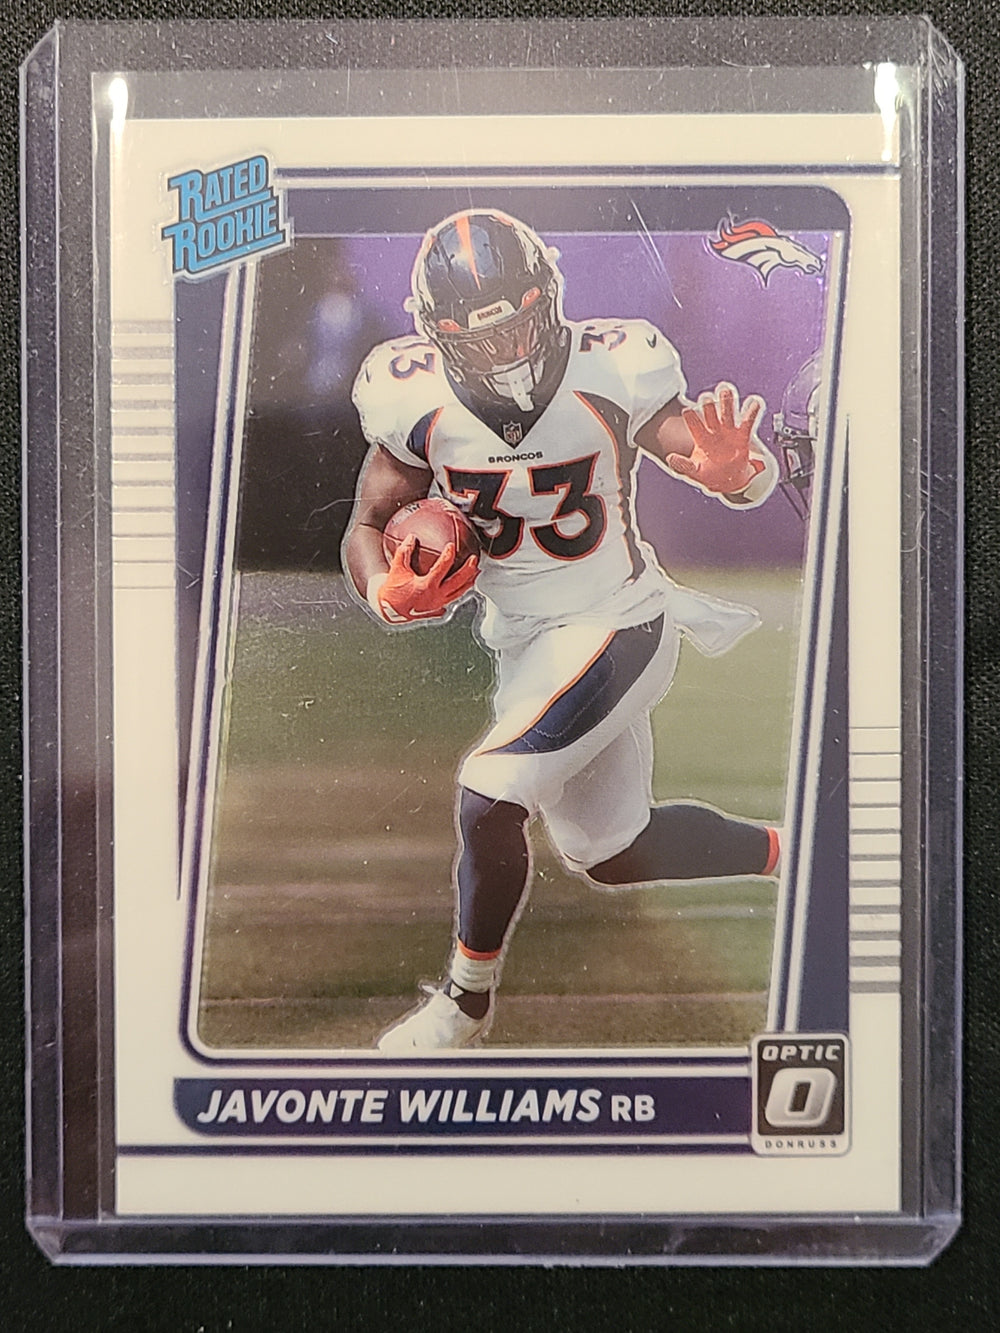 2021 Optic Rated Rookie Card #215 Javonte Williams Denver Broncos